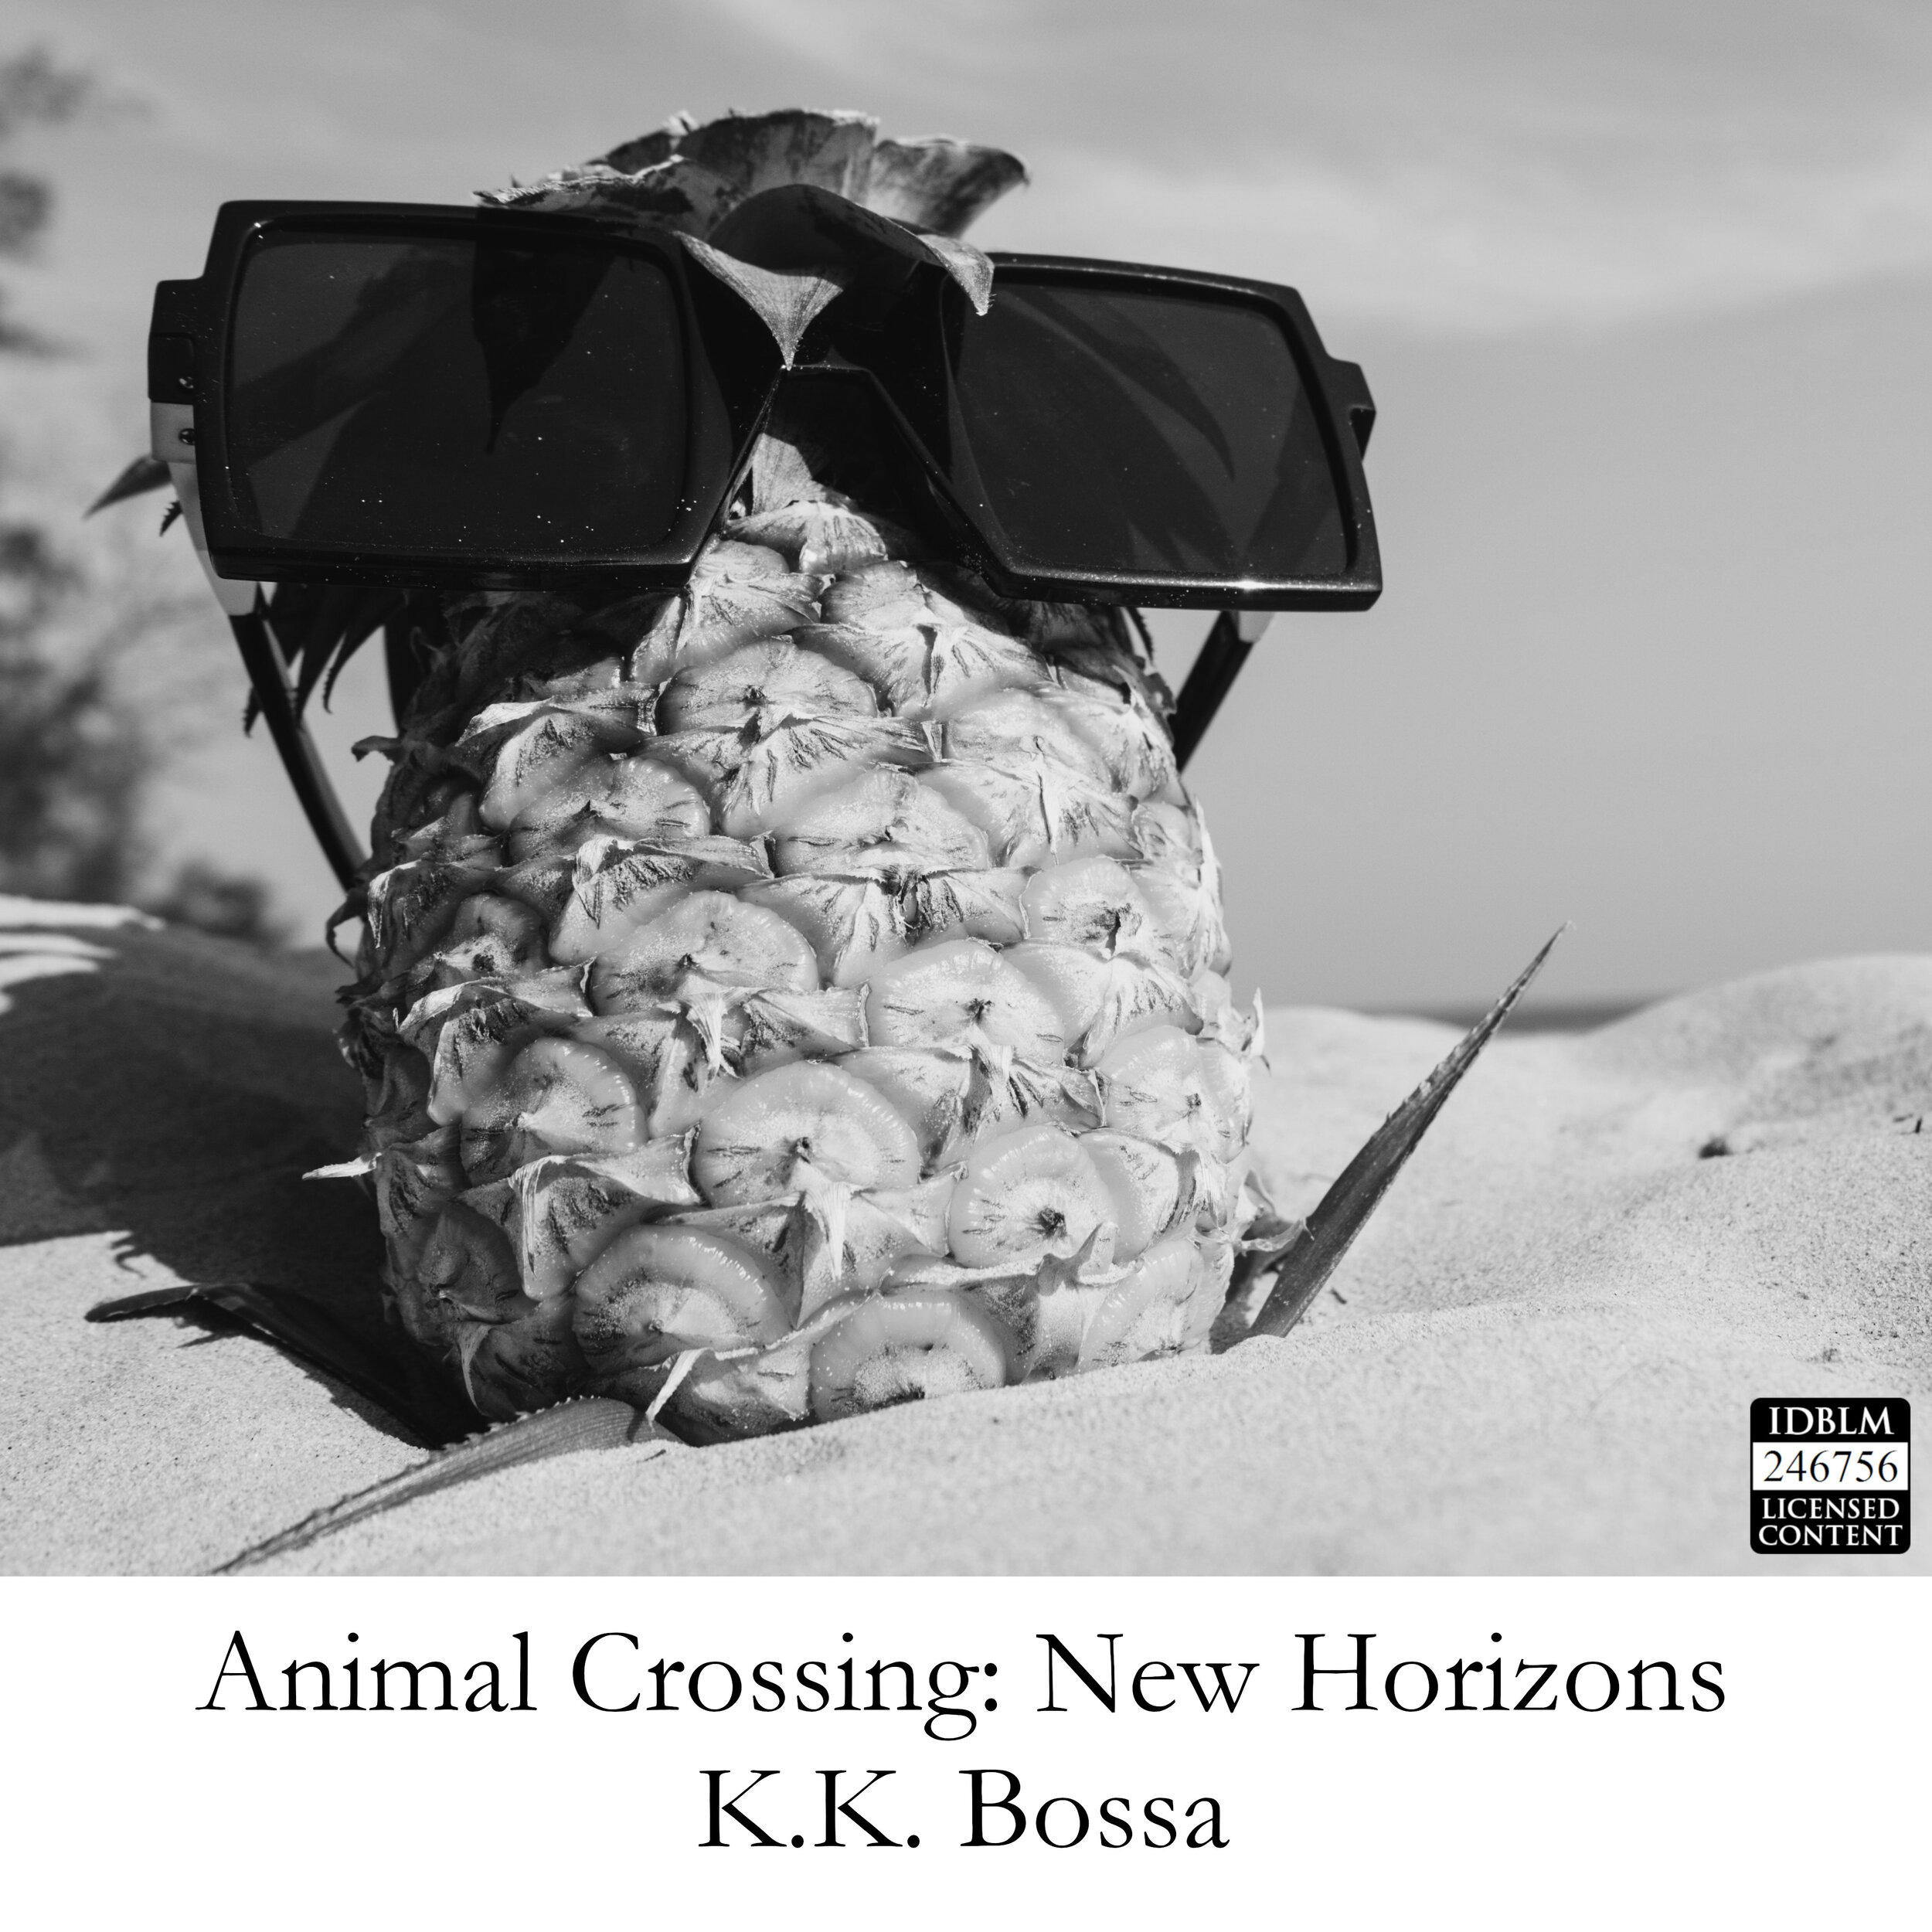 K.K. Bossa (from "Animal Crossing: New Horizons")